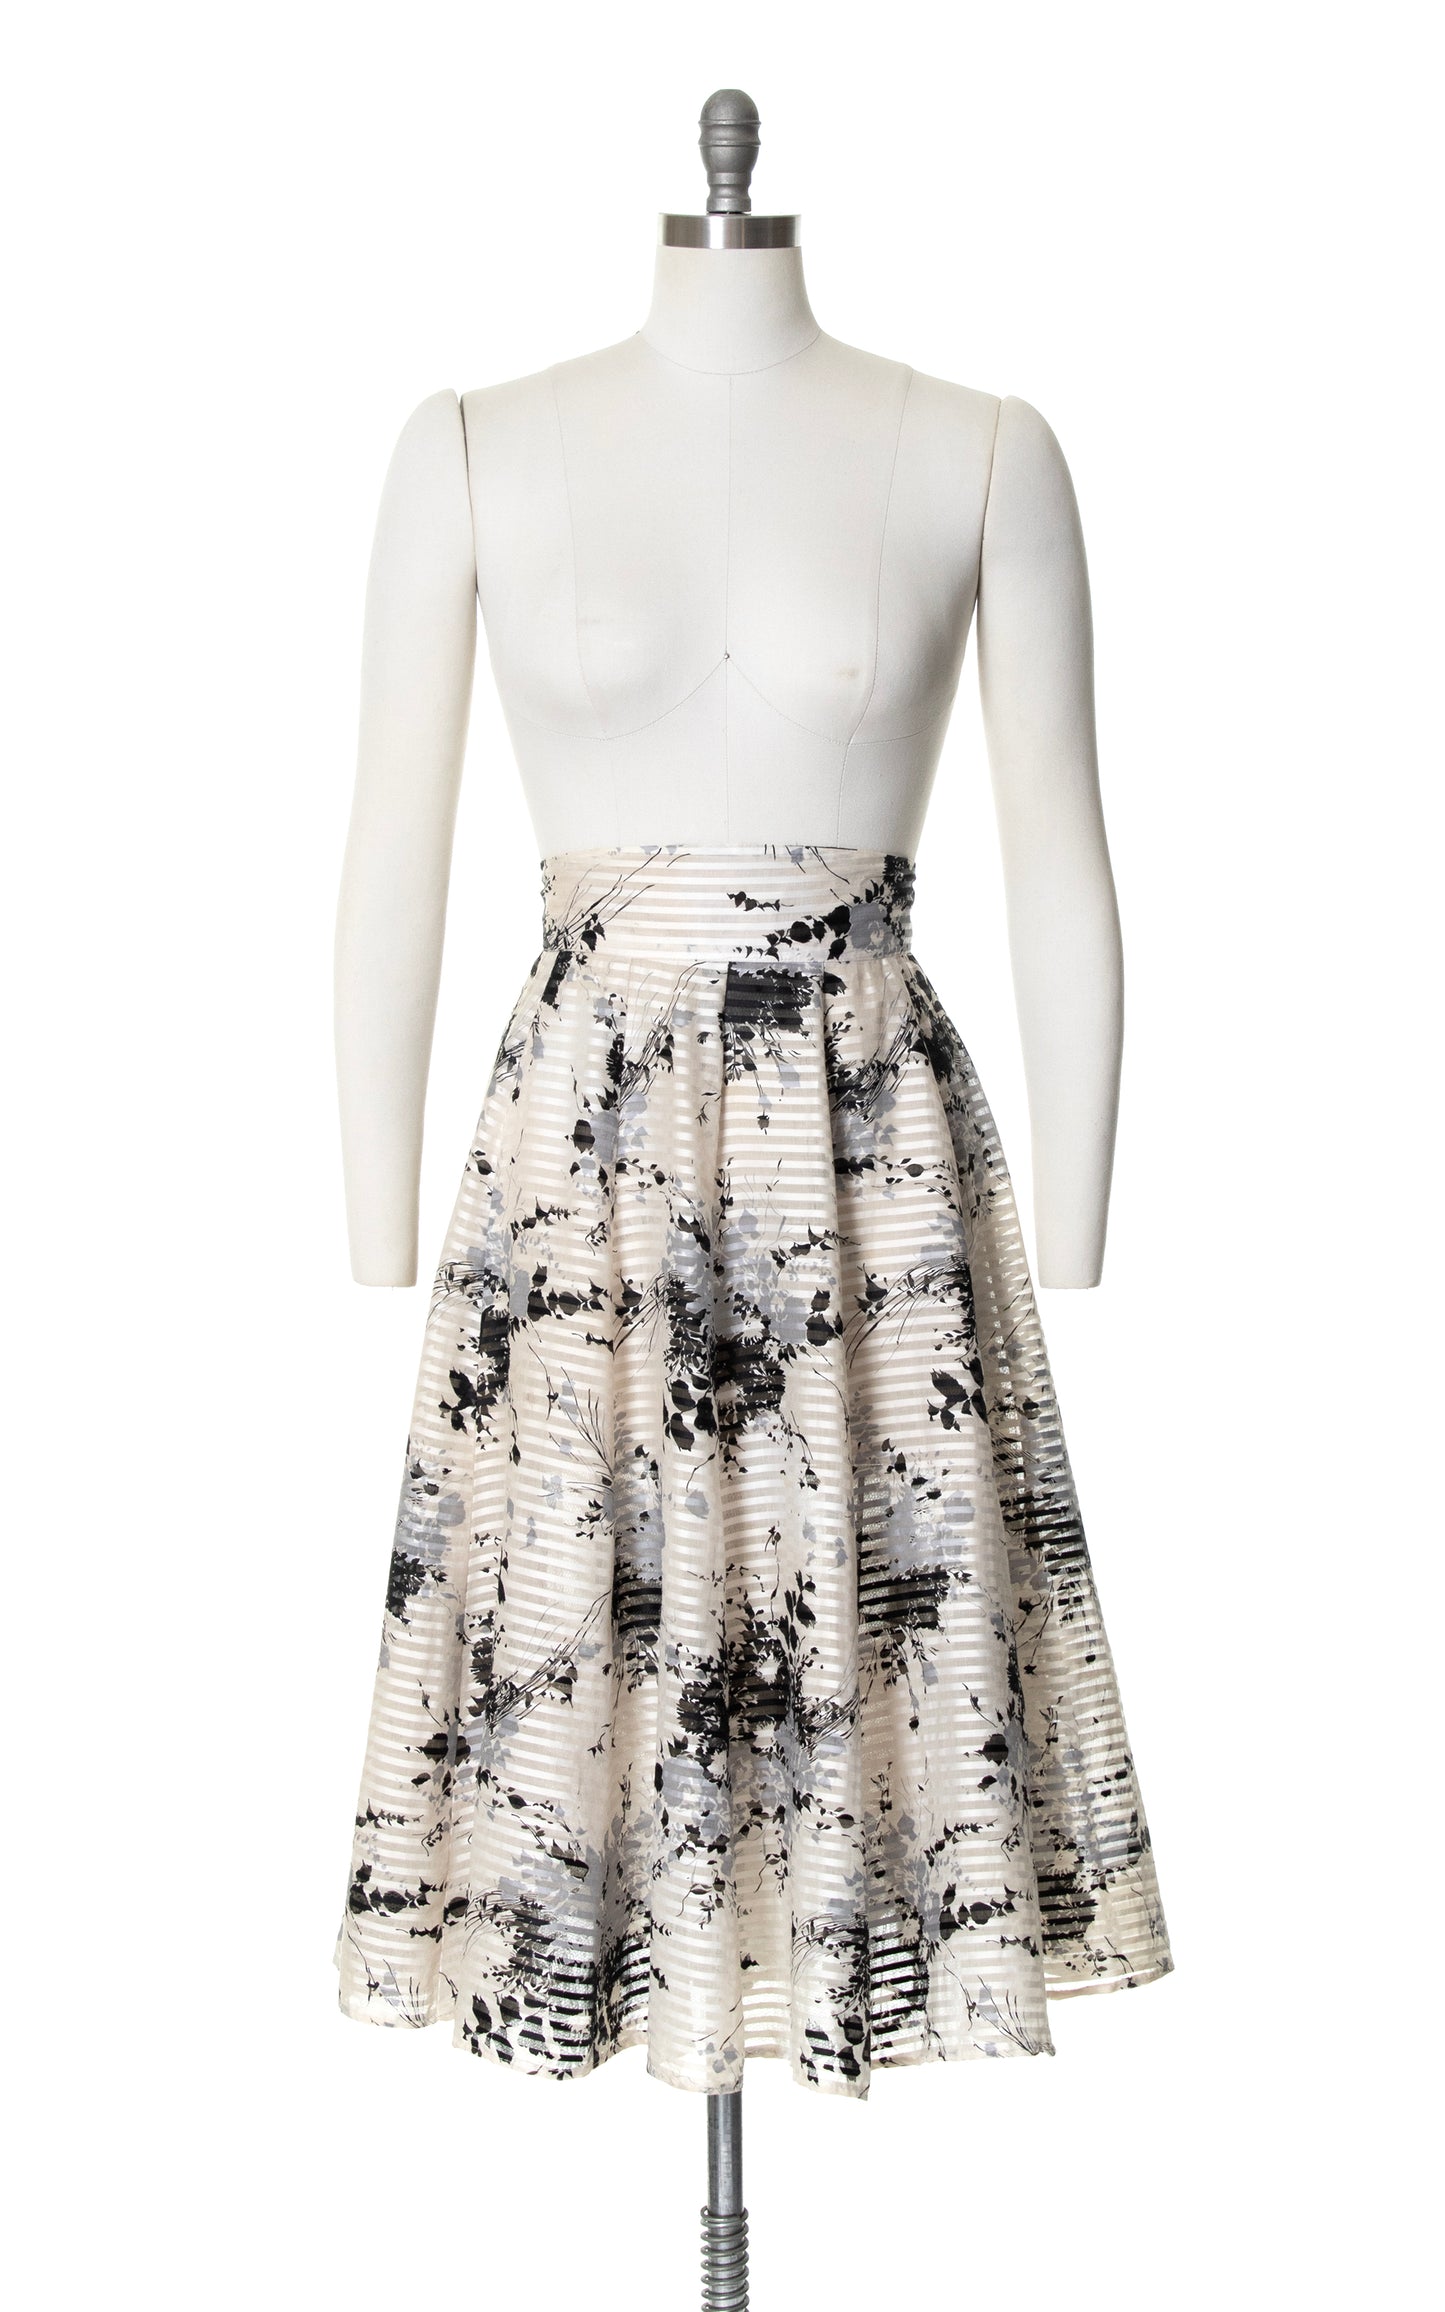 Vintage 50s 1950s Foliage Printed Cotton Full Swing Skirt High Waisted Tulle Petticoat BirthdayLifeVintage